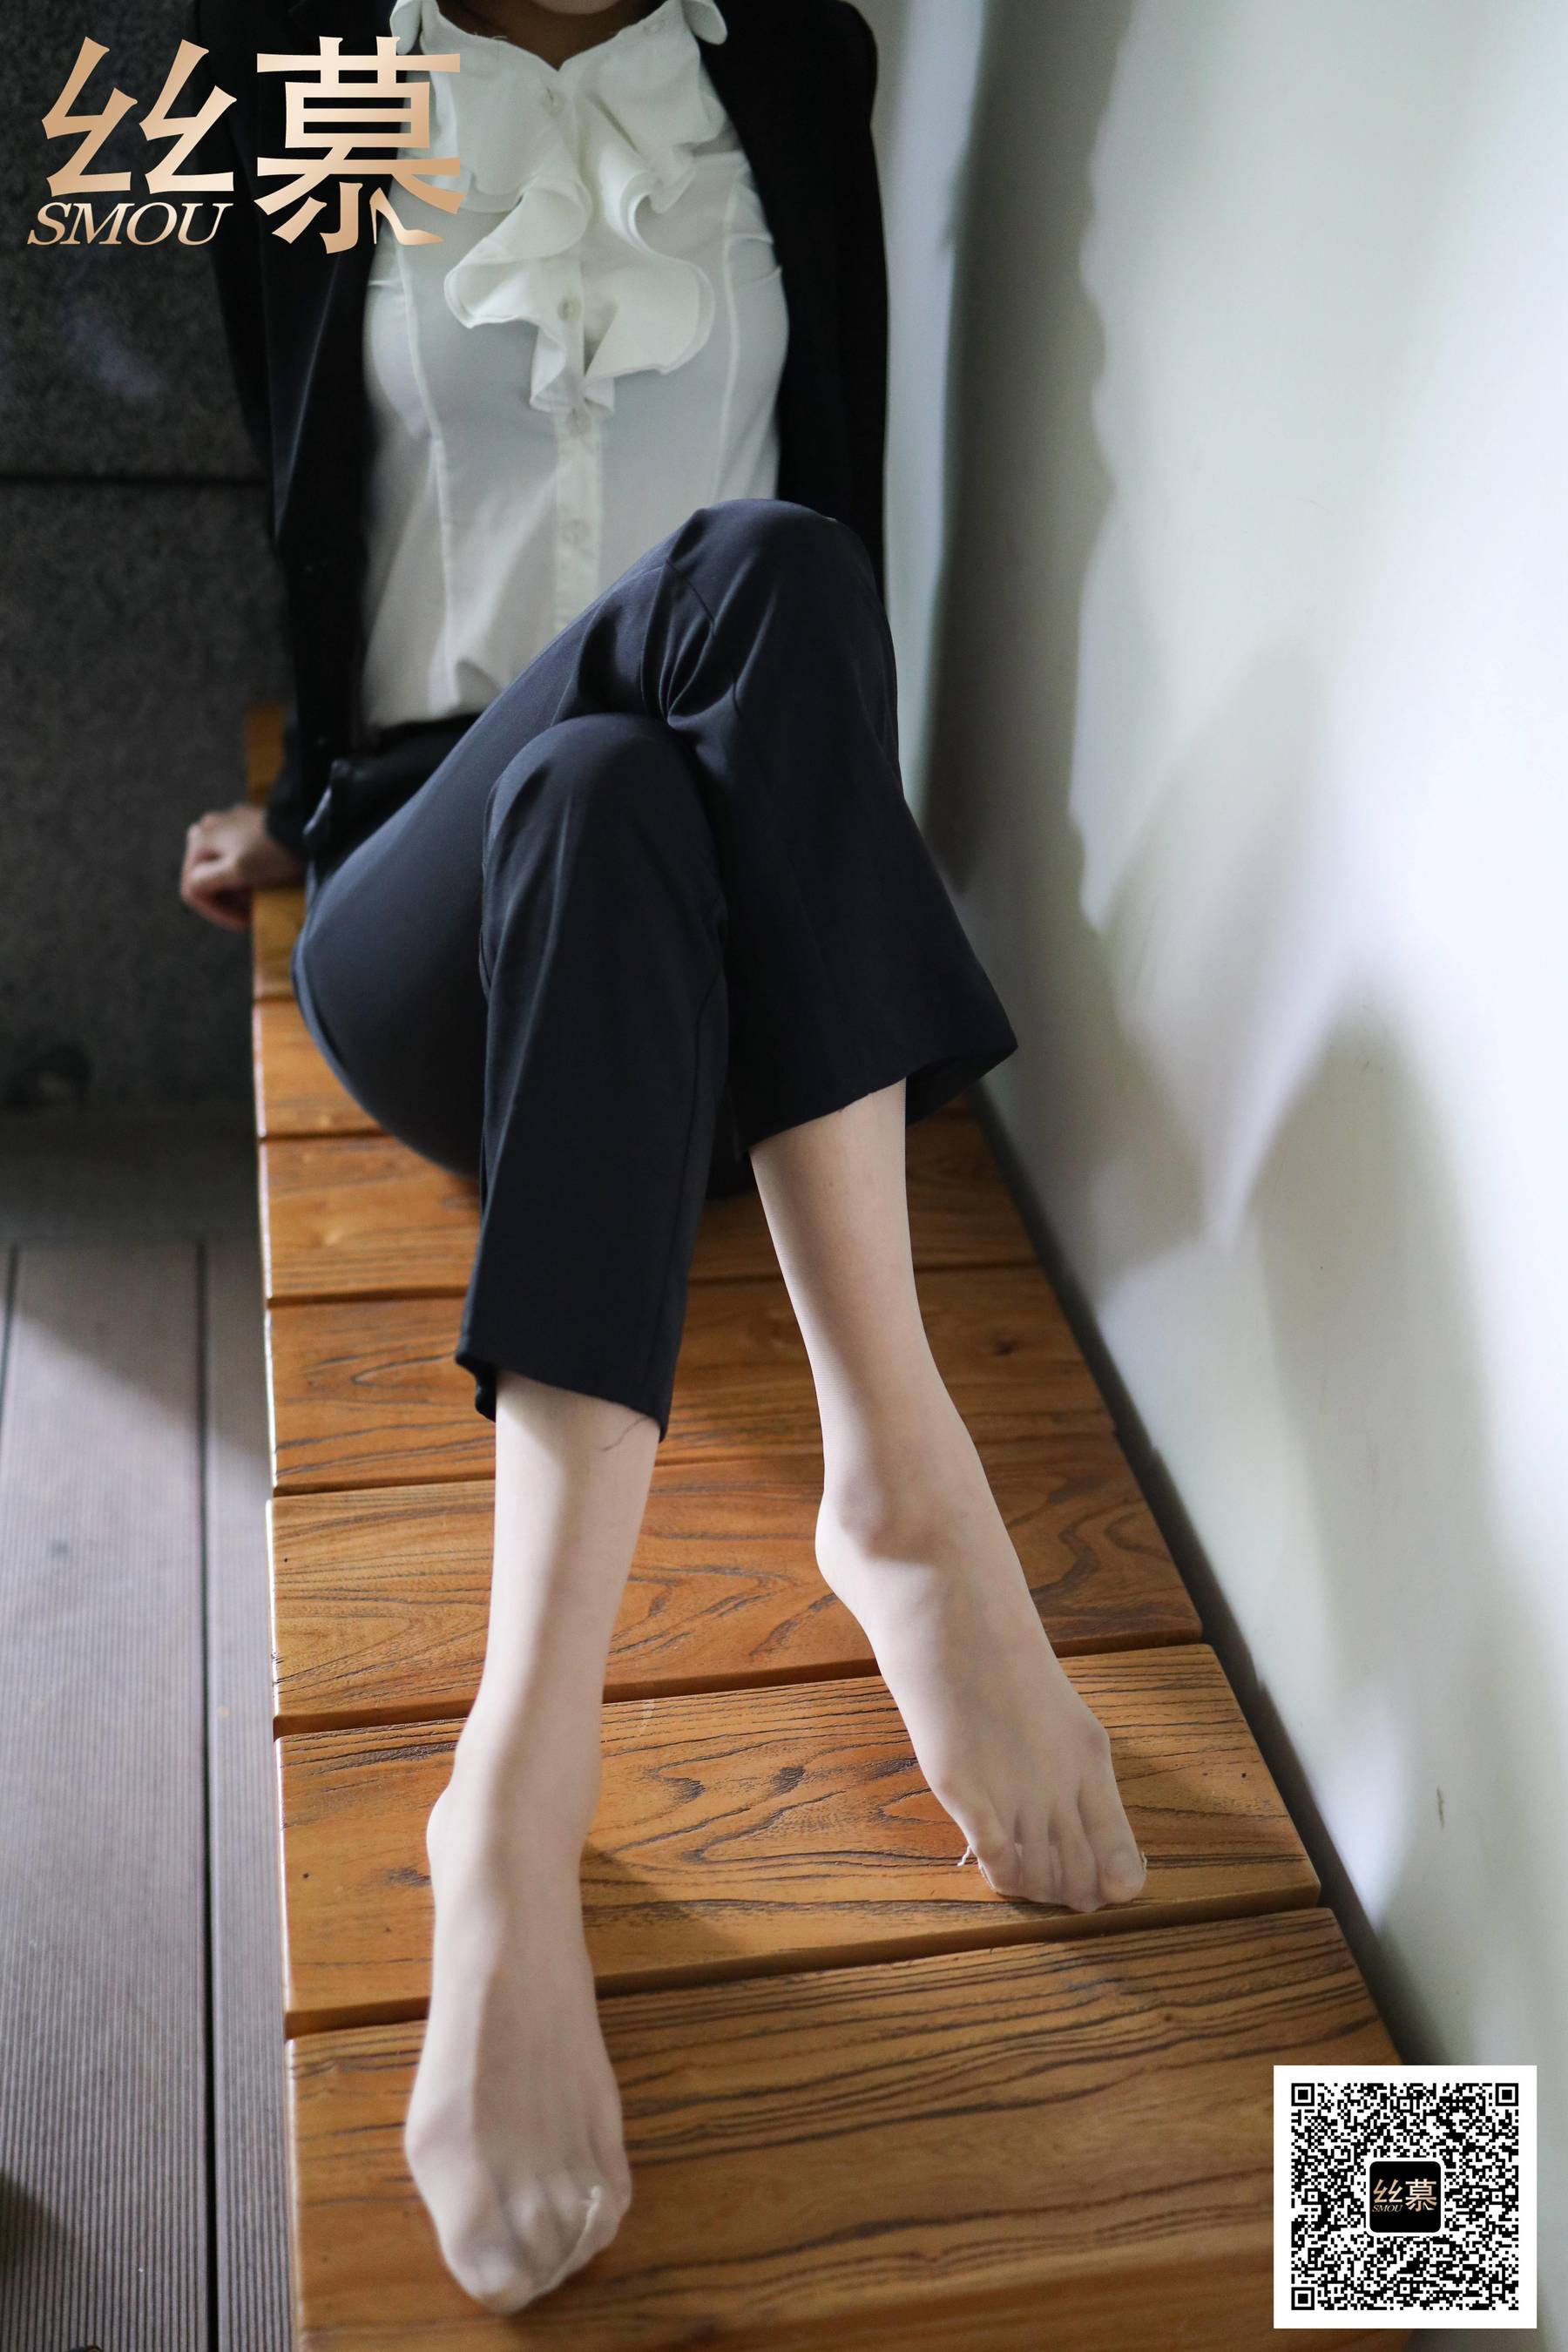 [Simu SMOU] Specific episode TX083 Yinger “OL silk in pants” photo of beautiful legs in stockings